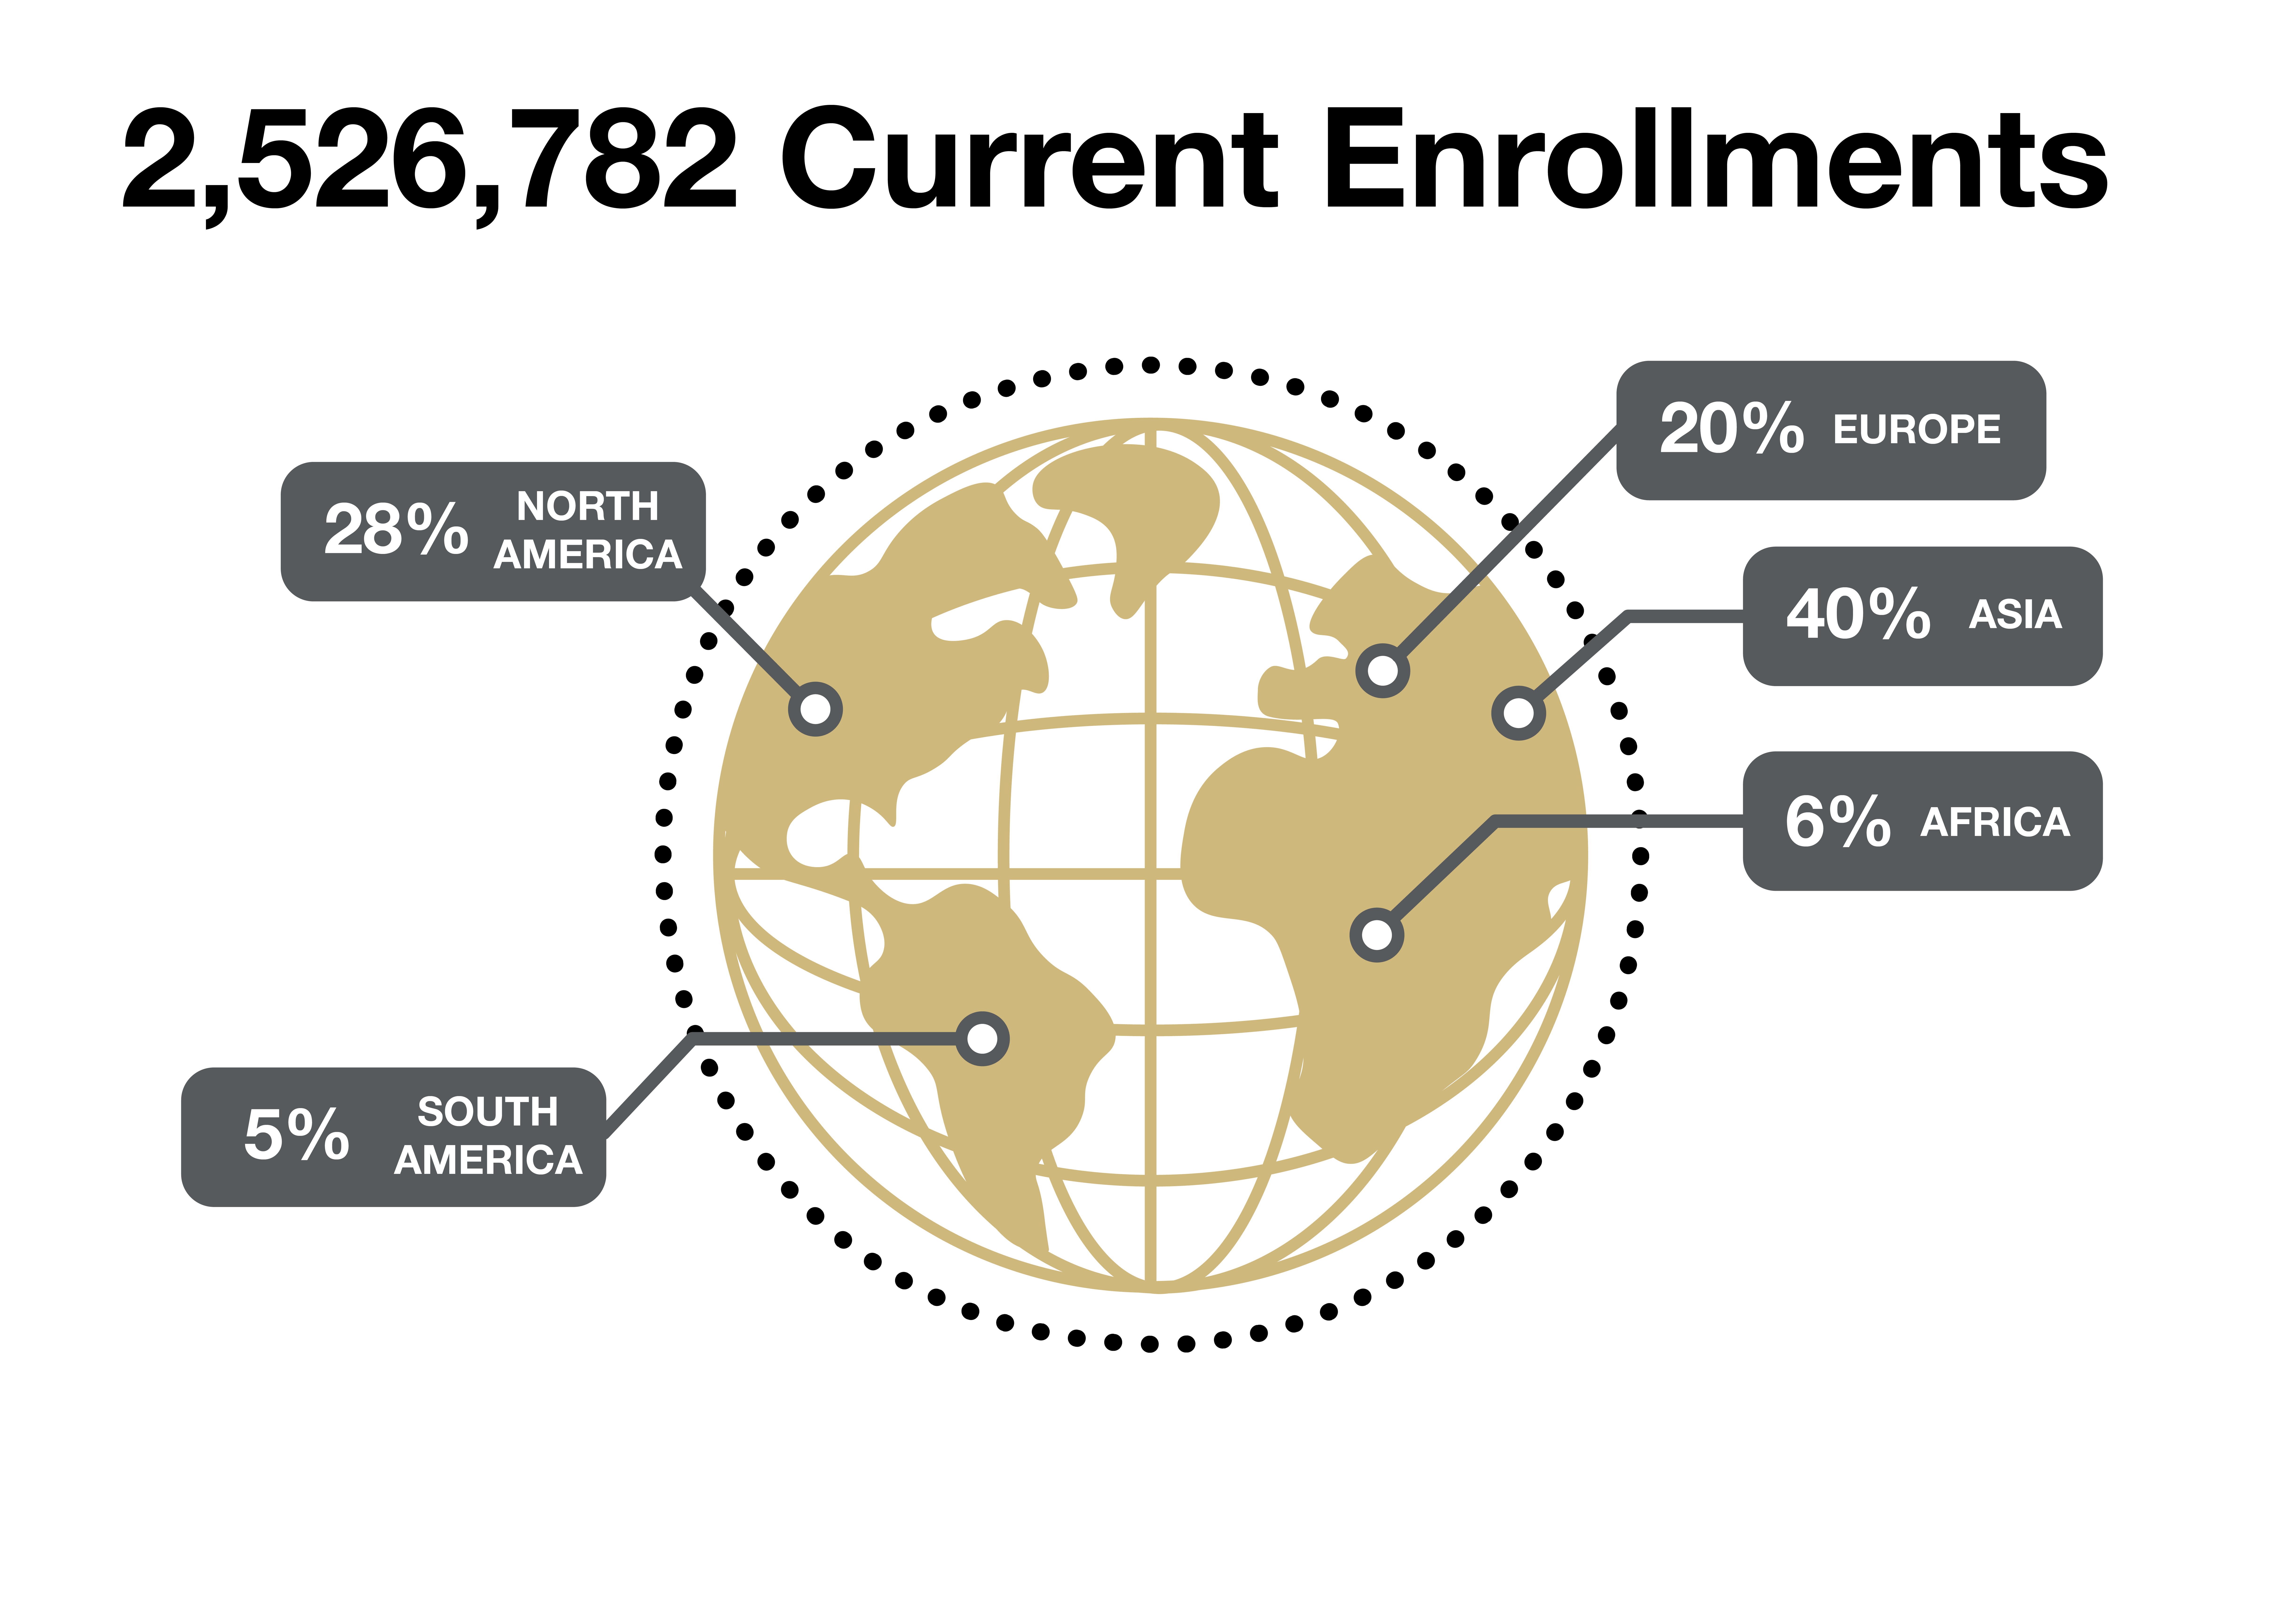 MOOC Globe. 2,536,782 current enrollments: 28% North America, 5% South America, 20% Europe, 40% Asia, 6% Africa